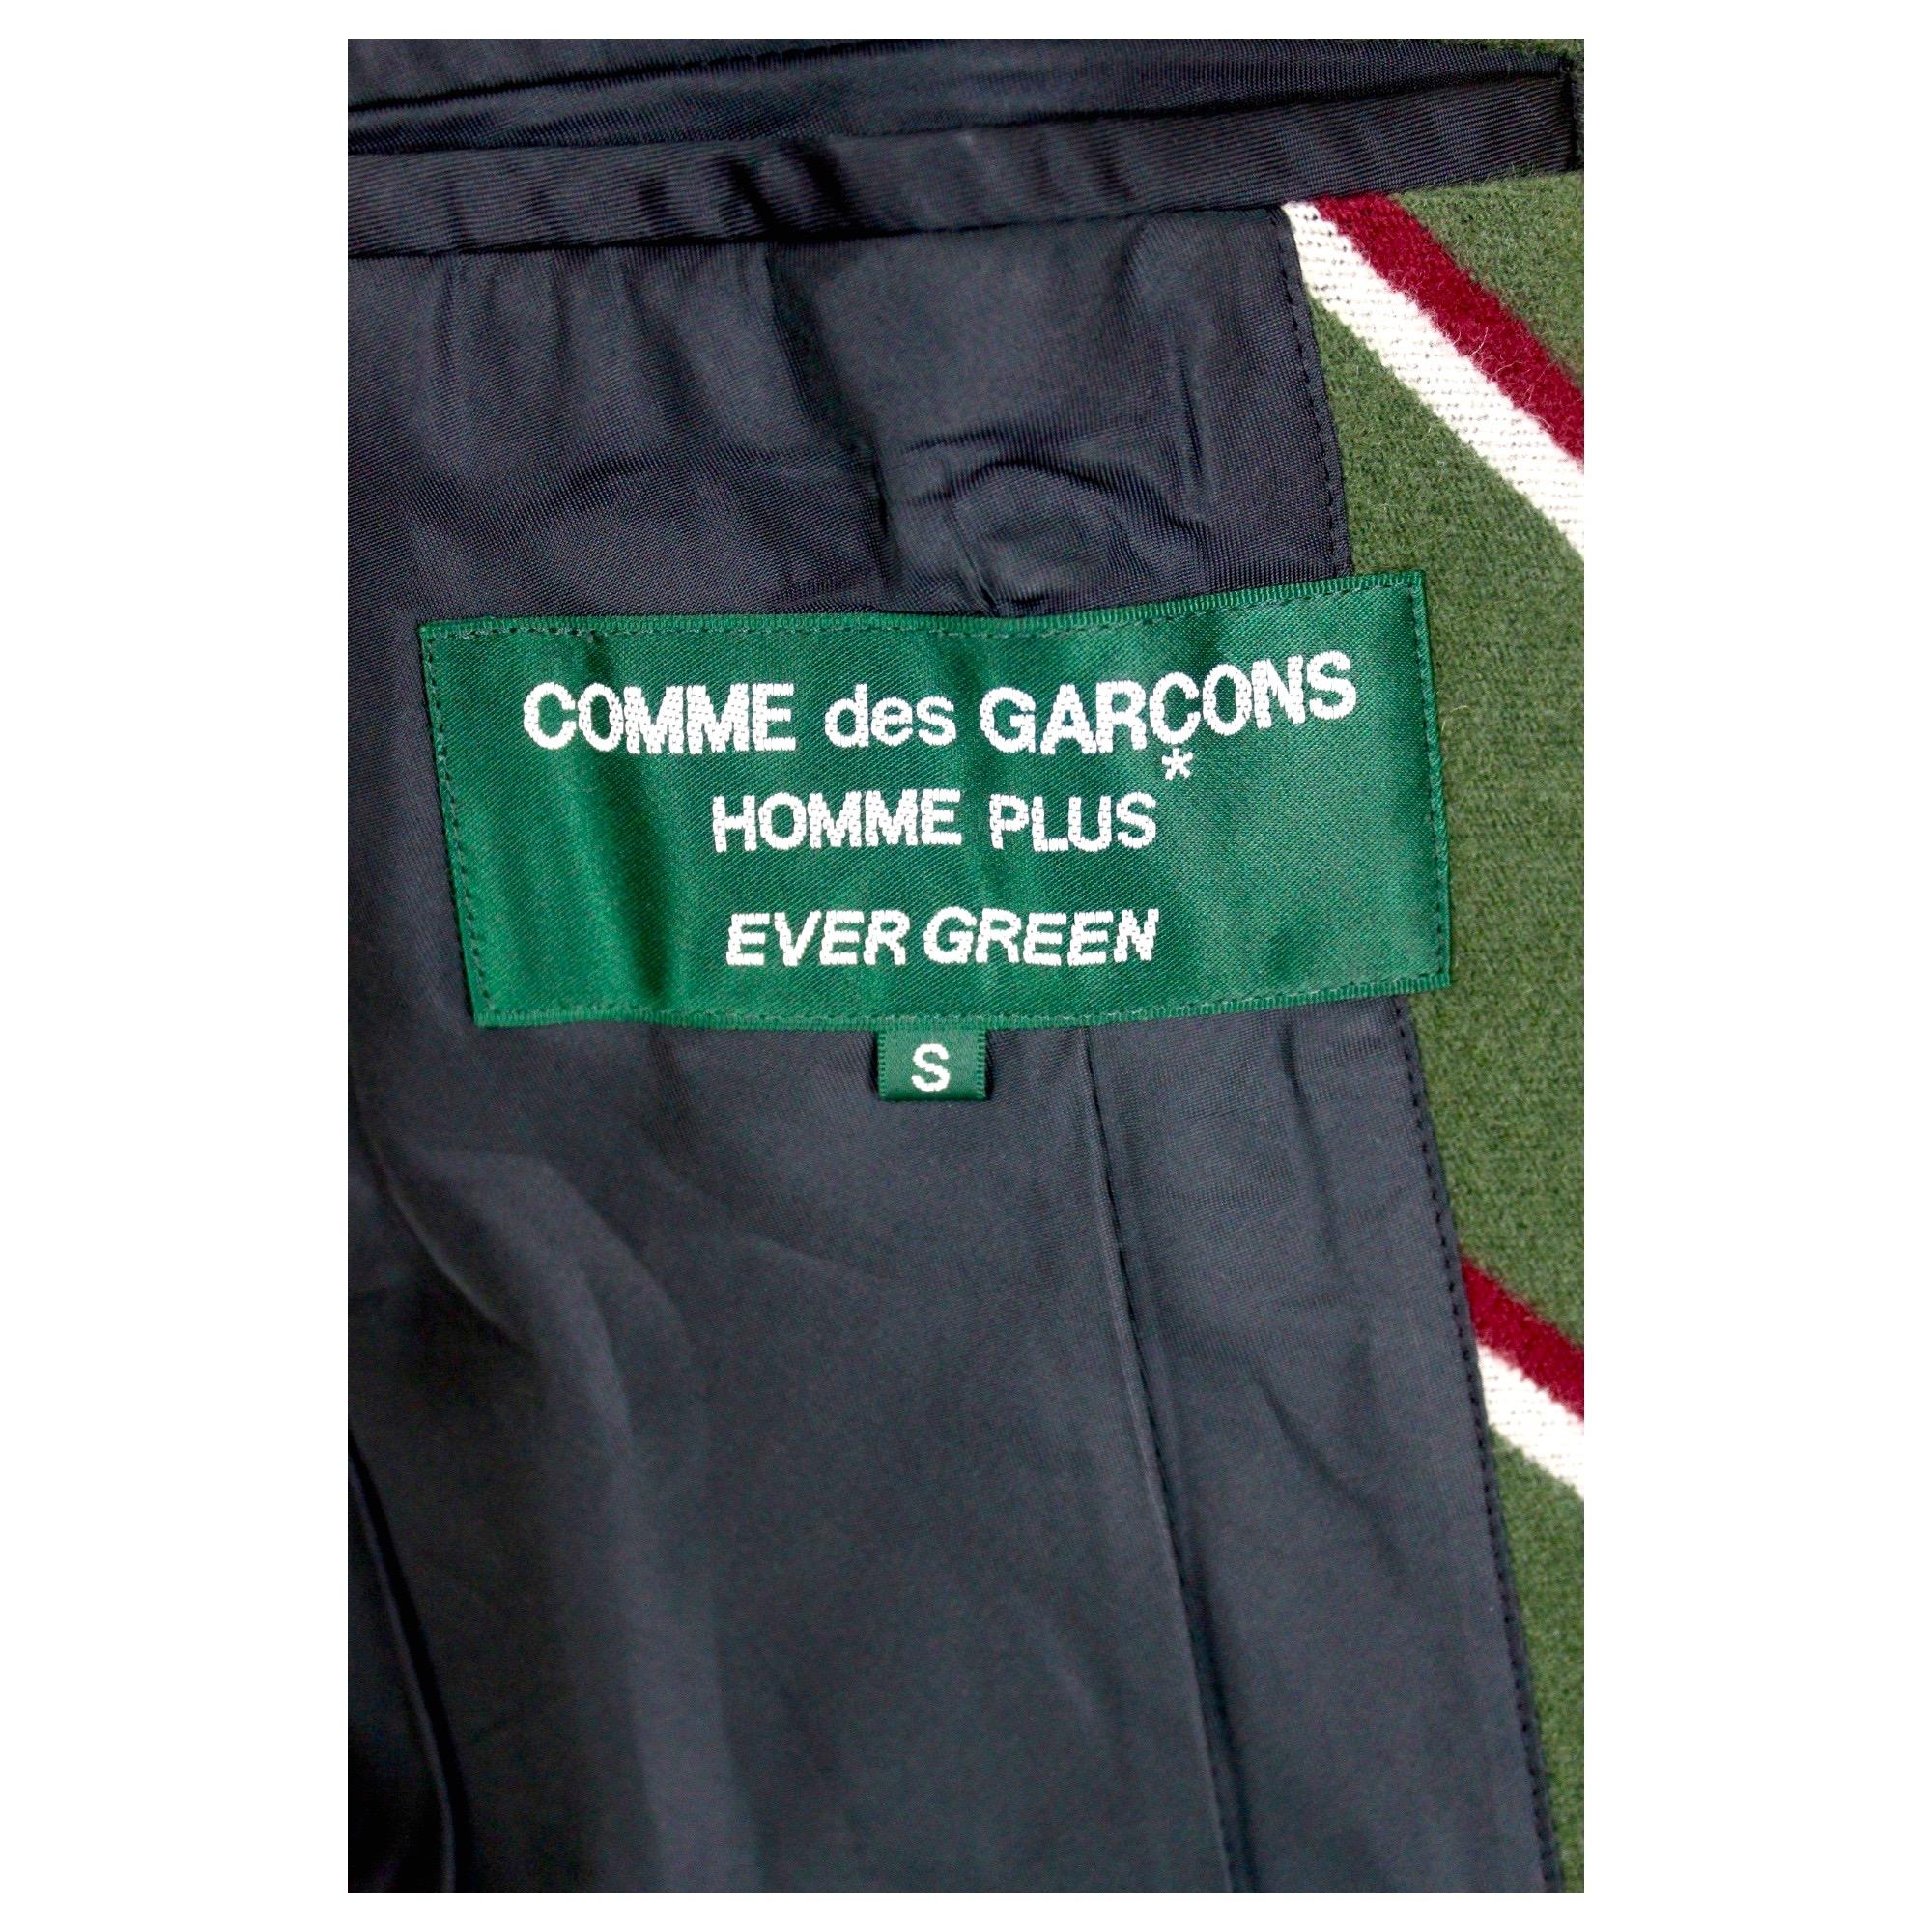 Comme des Garcons Homme Plus Evergreen Jacket For Sale 1